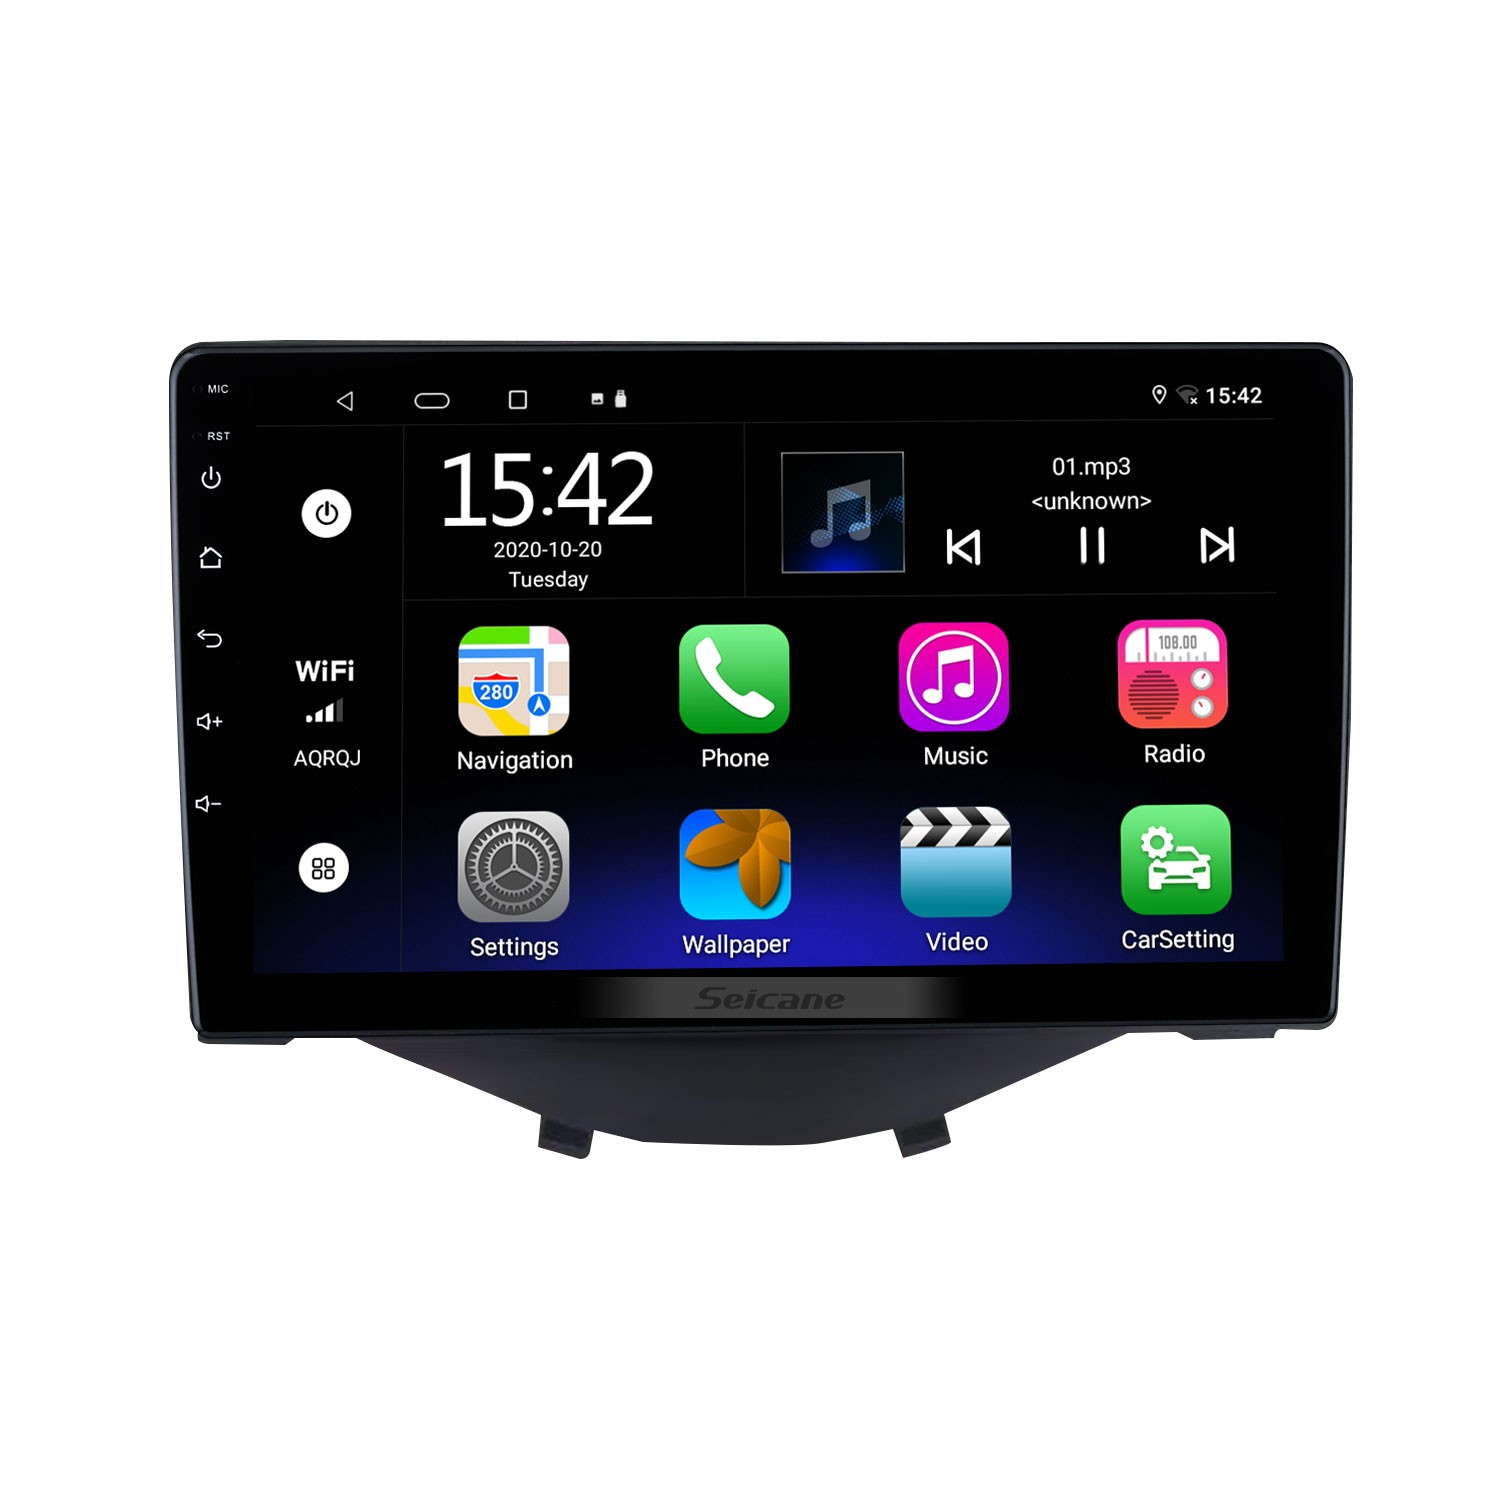 For Peugeot 108 Citroen C1 Toyota Aygo Car Radio Stereo GPS Navigator 6GB  128GB Autoradio Android